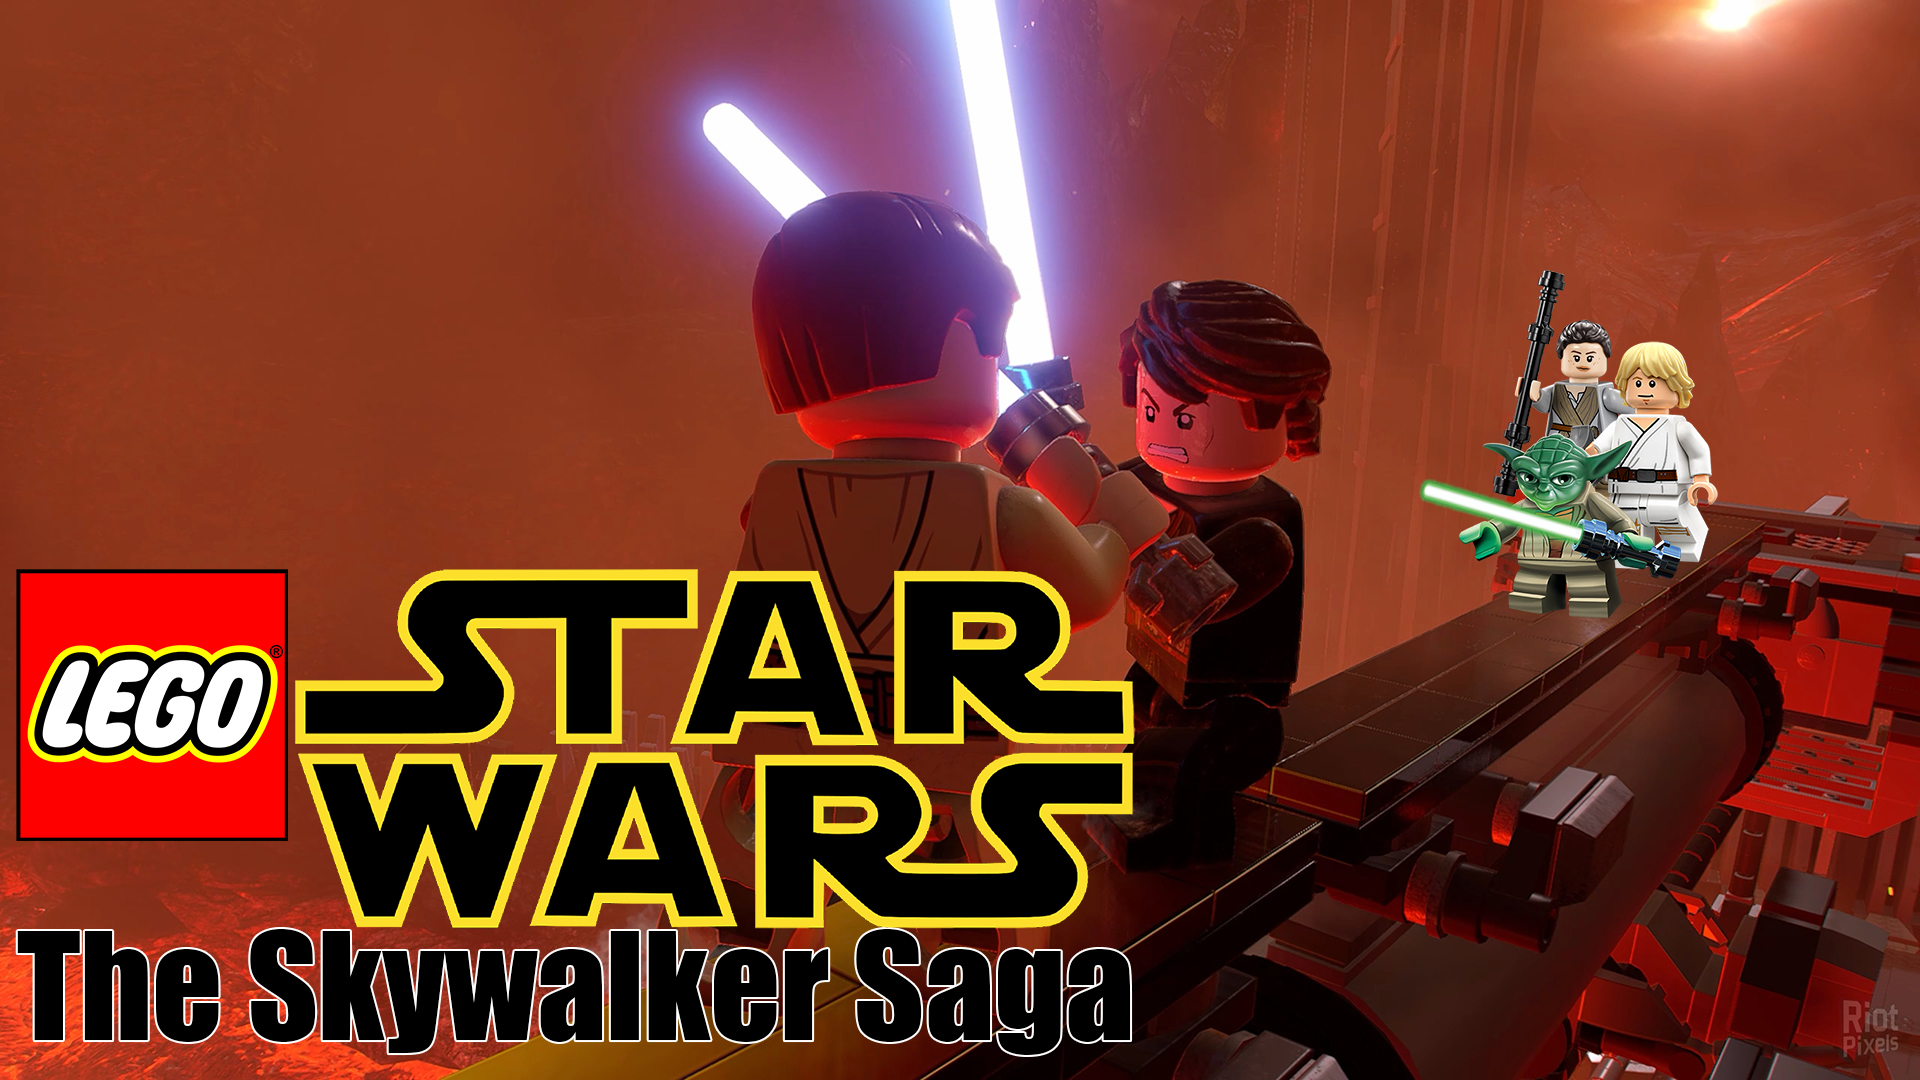 LEGO STAR WARS: THE SKYWALKER SAGA | ЧЕСТНЫЙ ОБЗОР